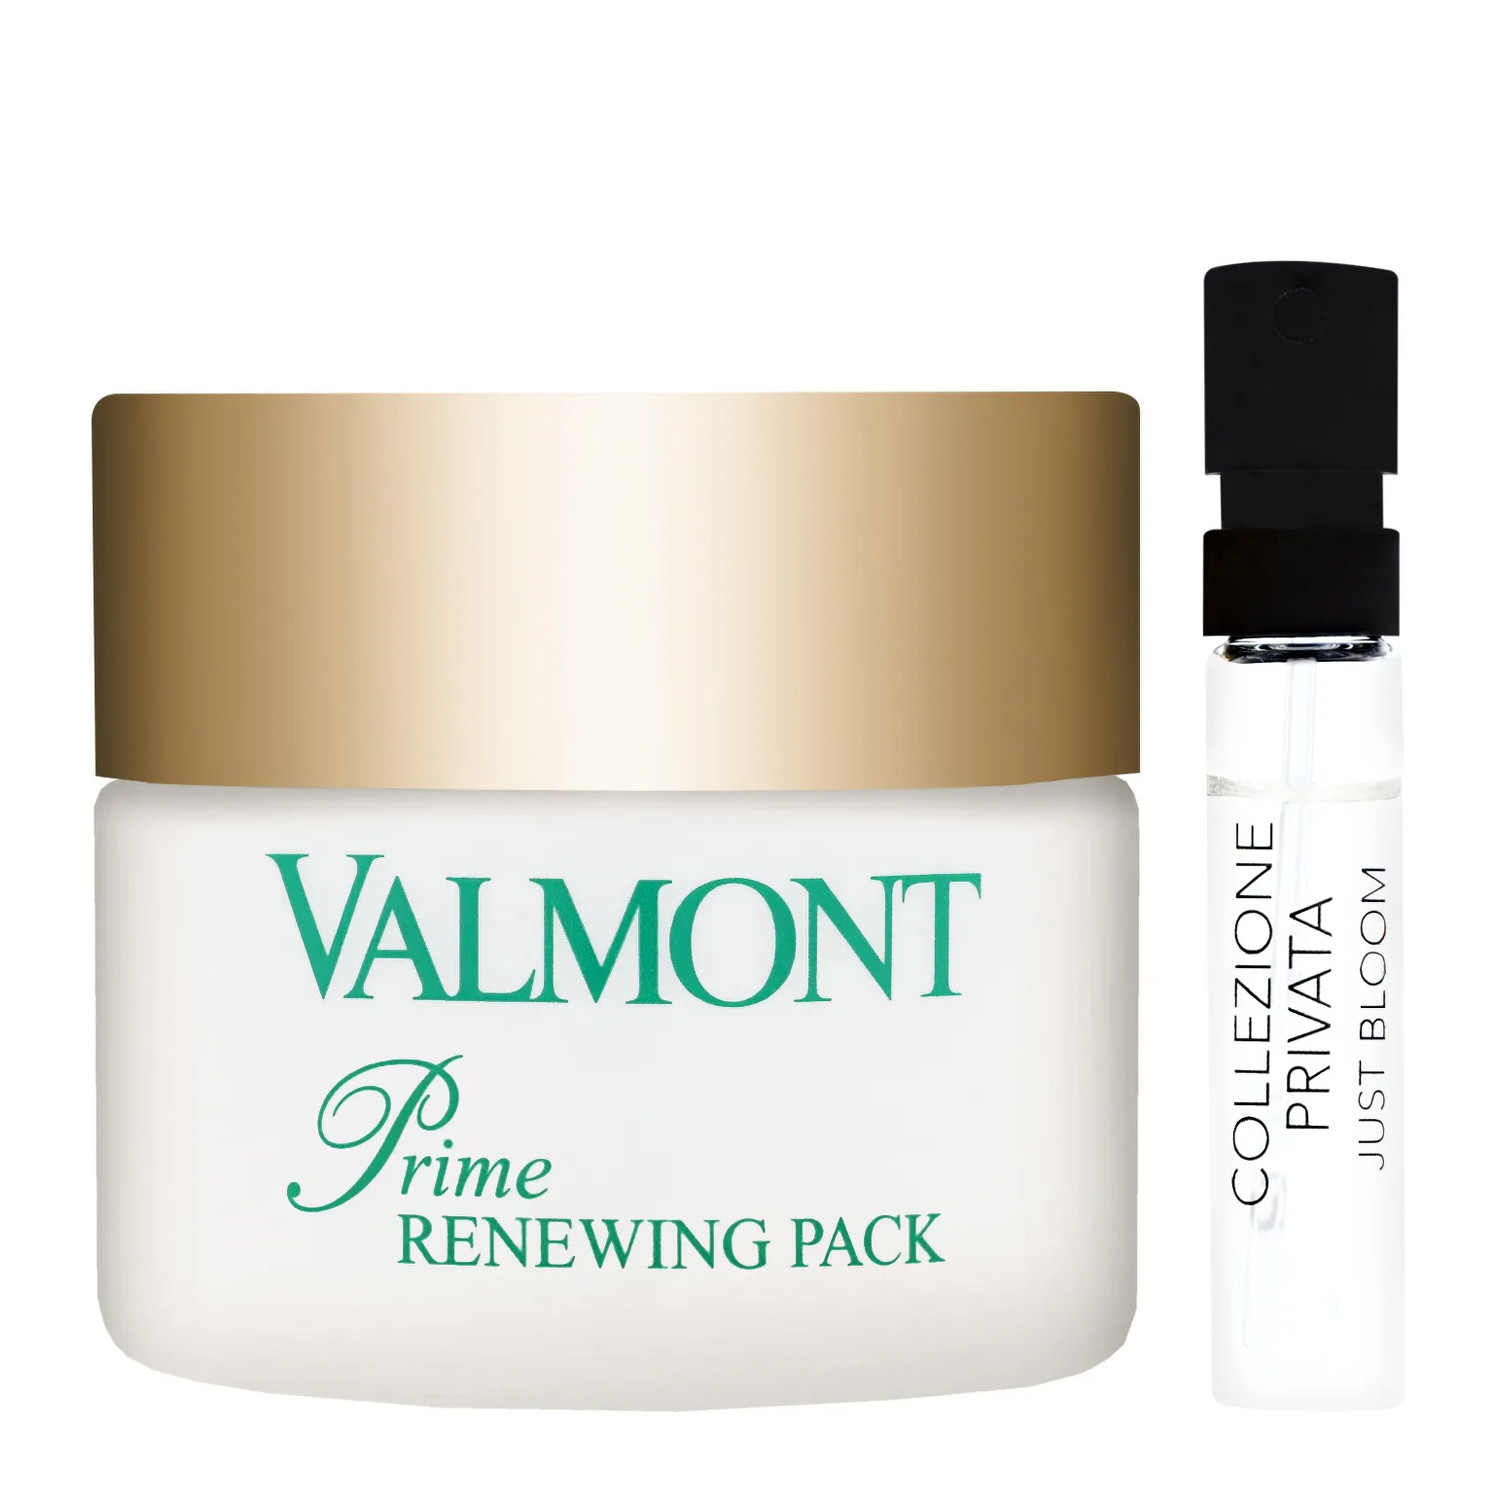 Valmont Prime Renewing Pack and Just Bloom Sample Маска &quot;Золушки&quot; + пробник парфюмированной воды